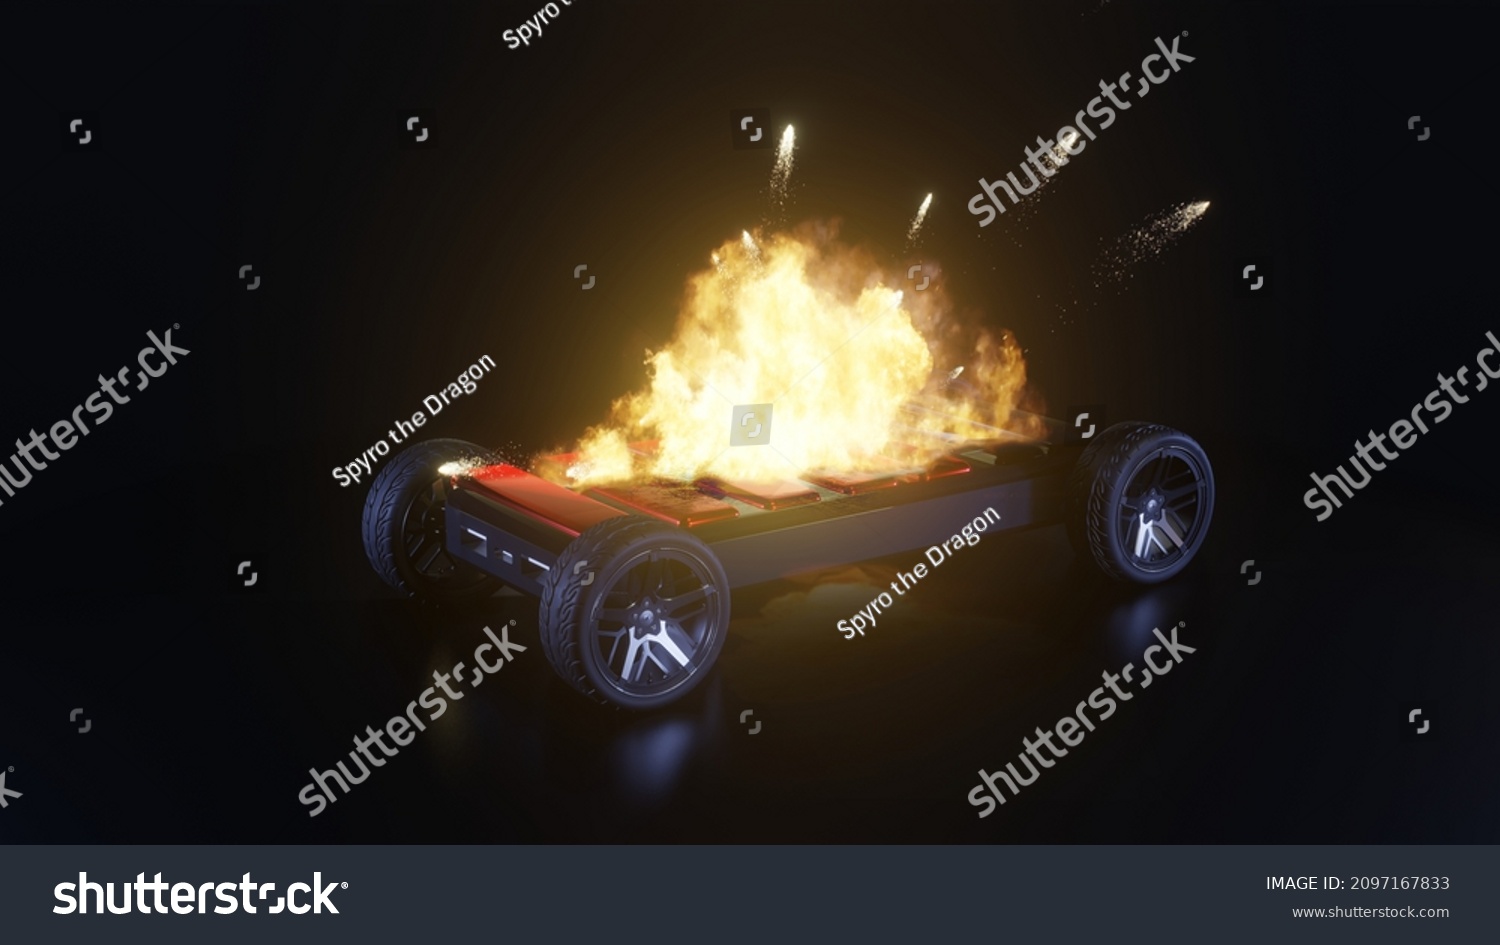 Ev Battery On Fire Burning Electric Stock Illustration 2097167833